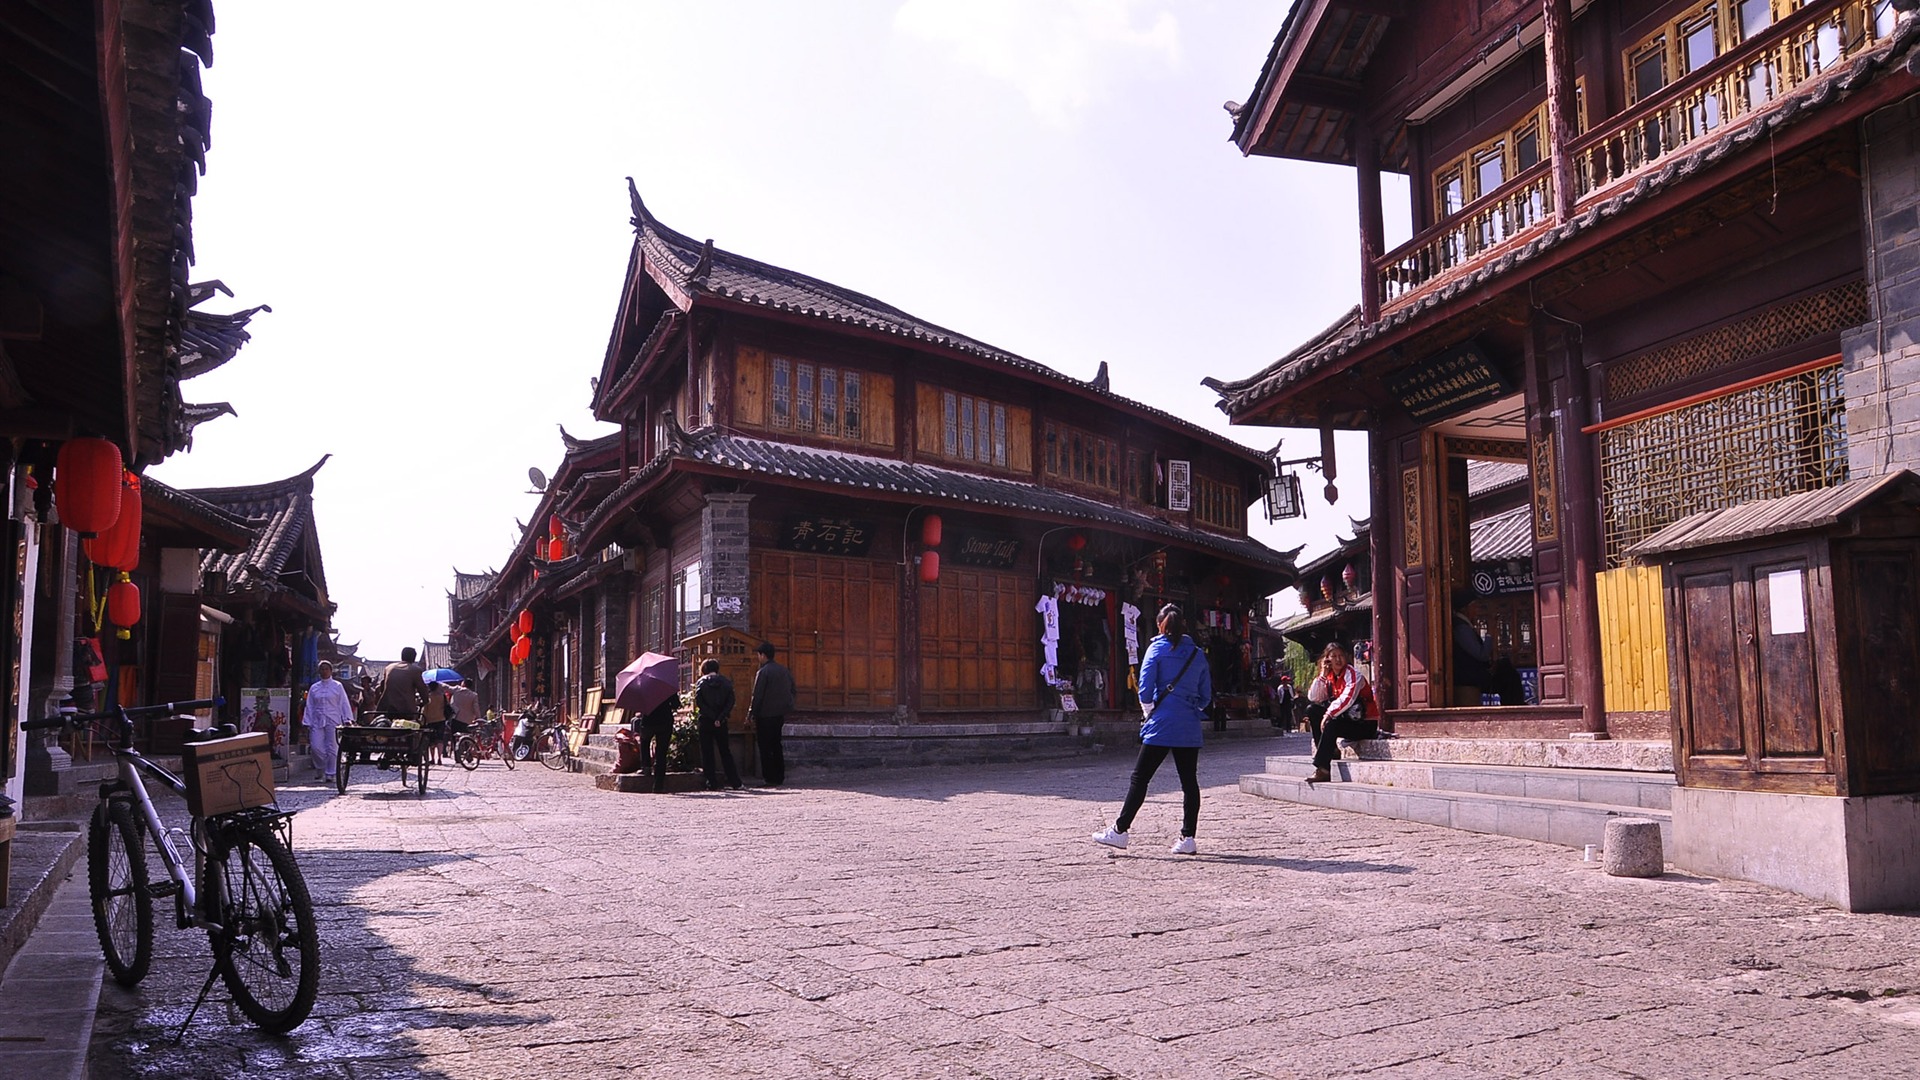 Lijiang ancient town atmosphere (2) (old Hong OK works) #14 - 1920x1080